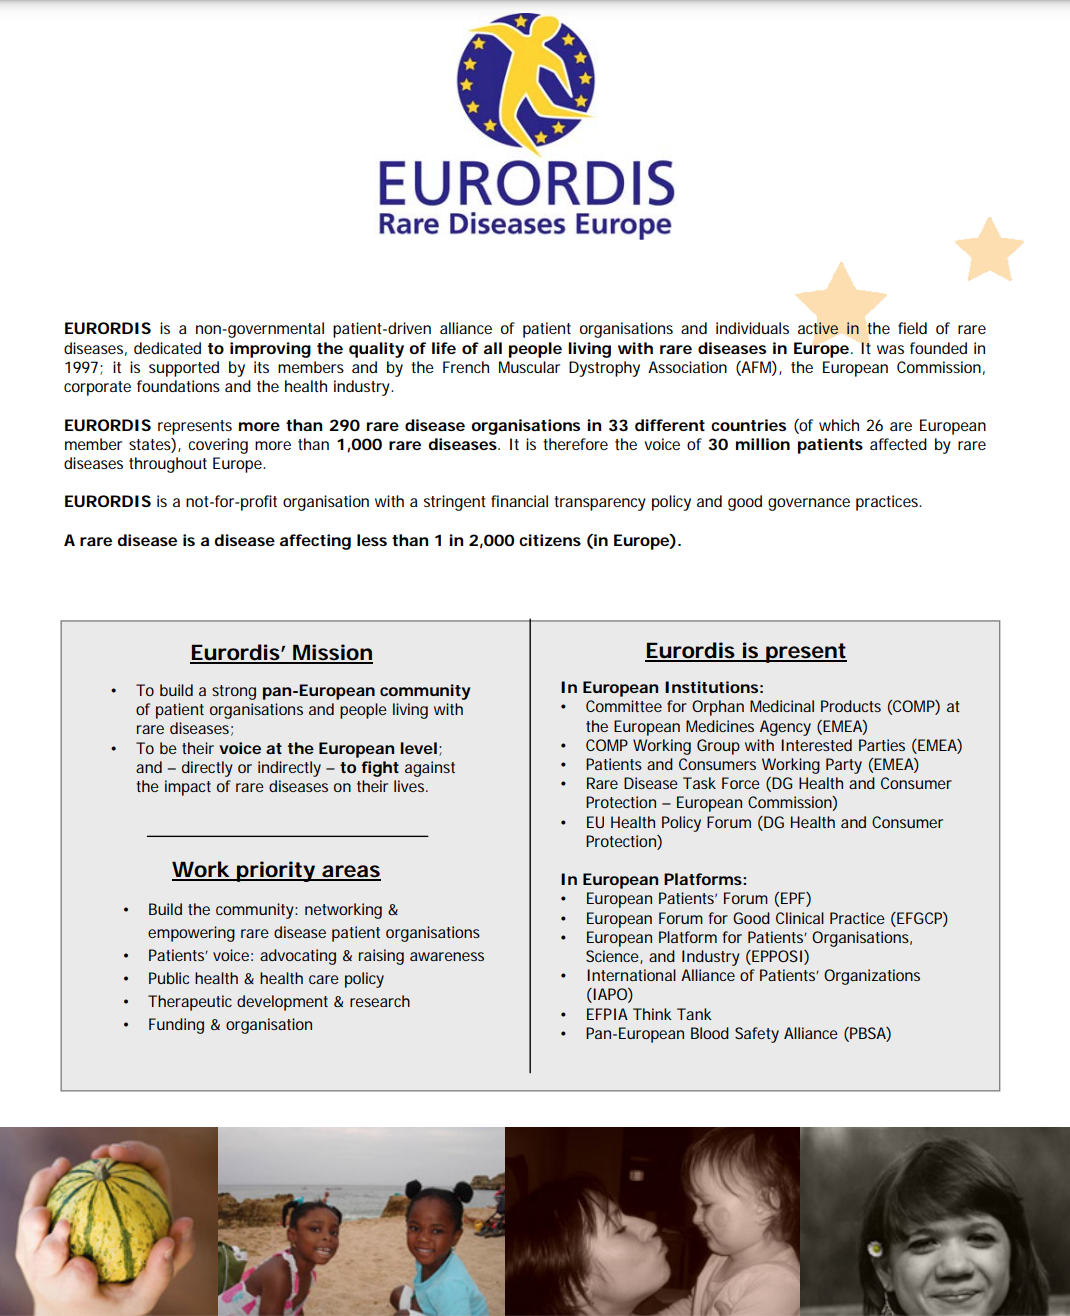 Eurordis: A Brief Presentation